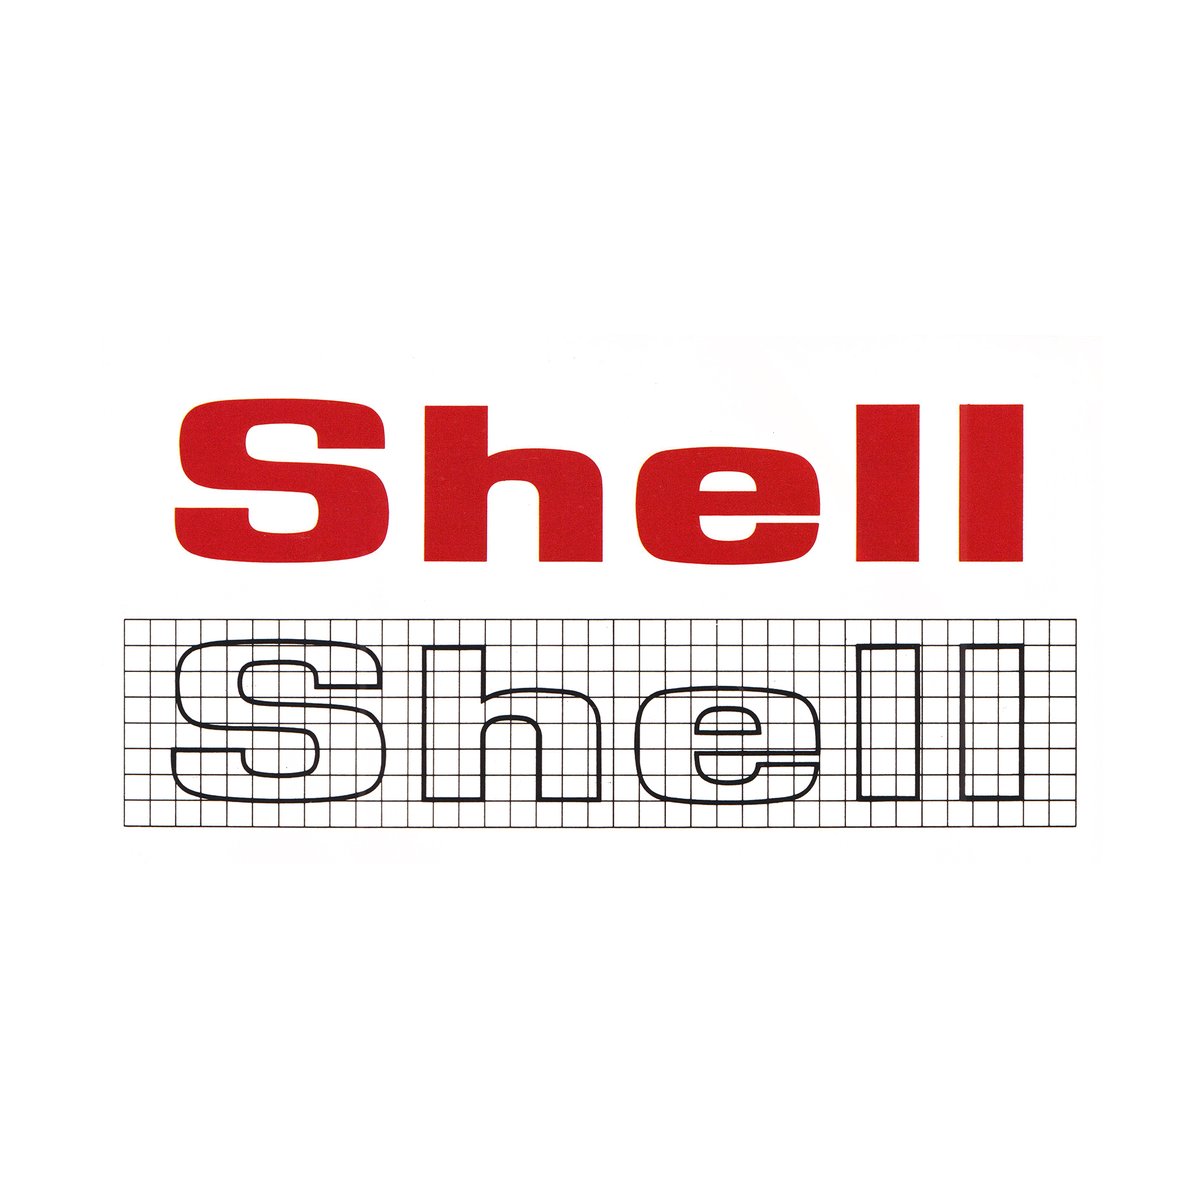 Shell by Raymond Loewy, C.E.I. France, 1972.
Discover more logos at logo-archive.org

#logos #branding #logodesign #graphicdesign #logodesign